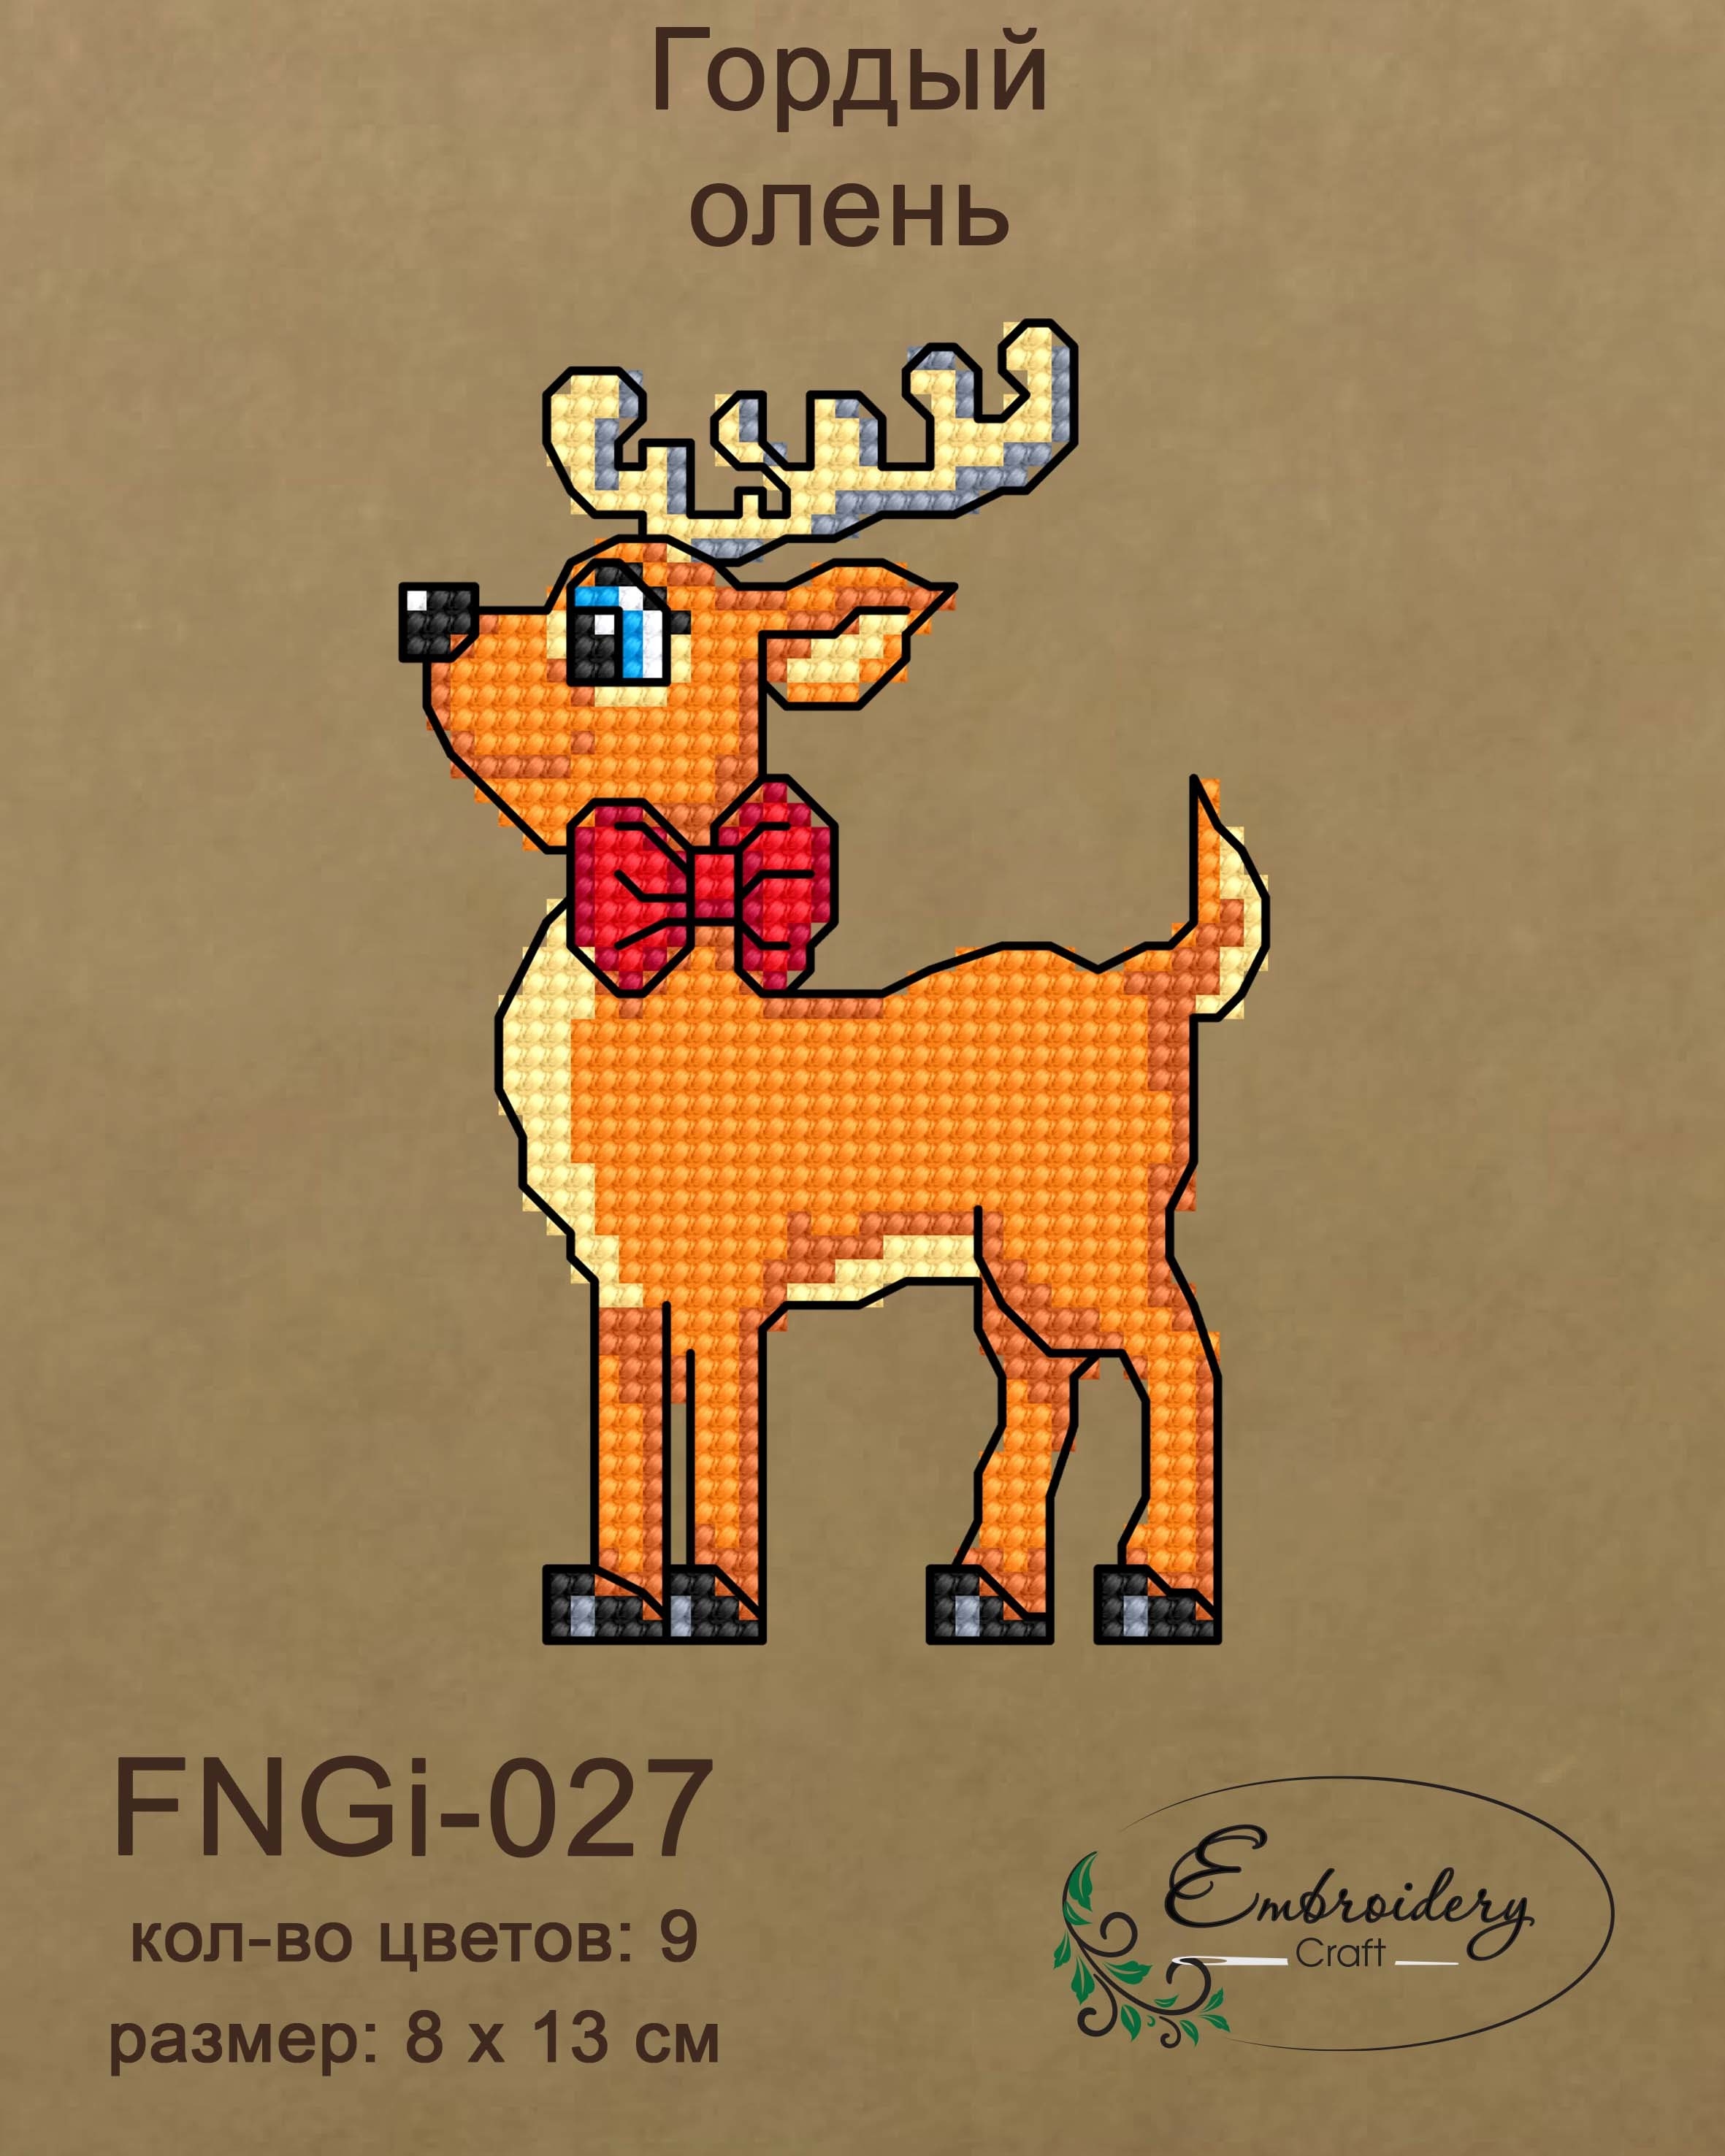 FNNGi-027 Гордый олень